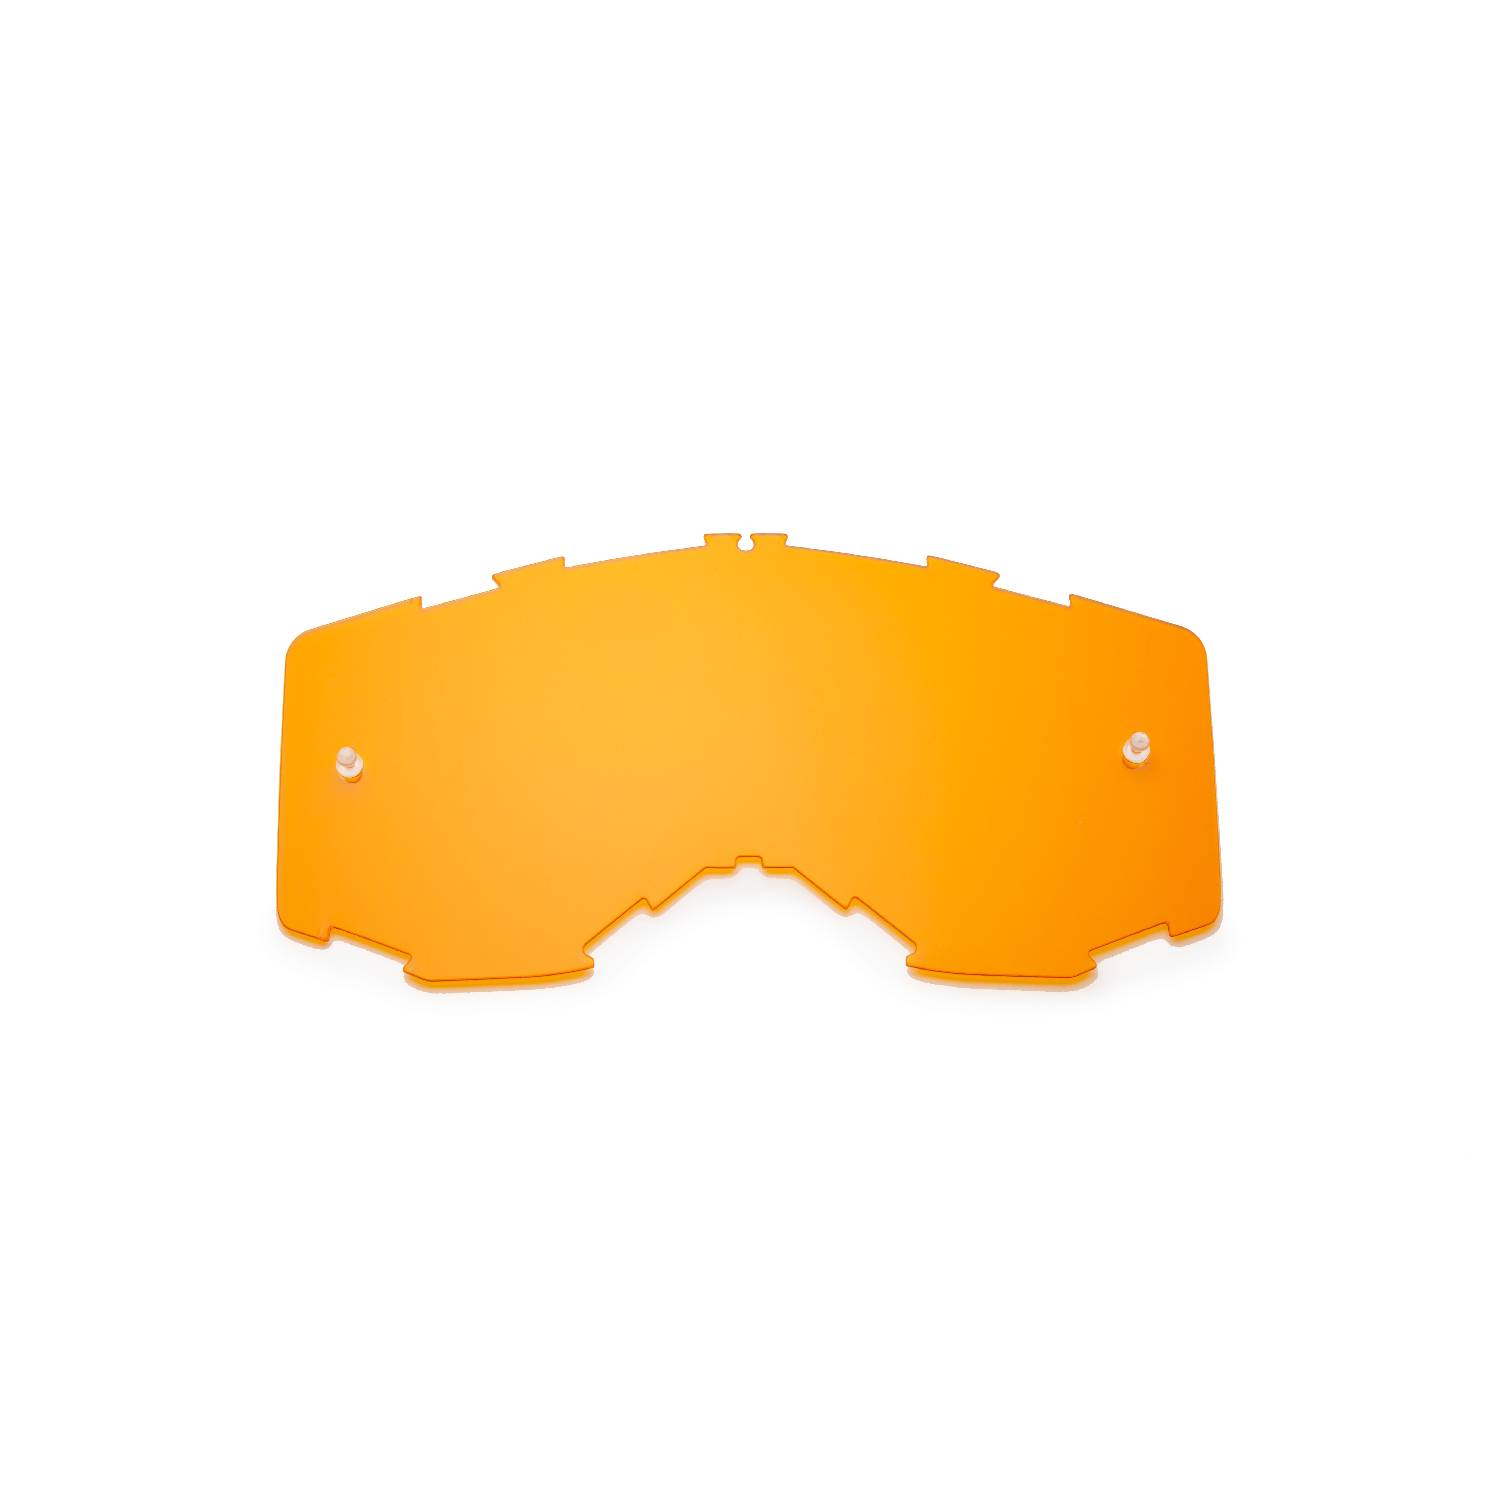 orange replacement lenses for goggles compatible for Aka Magnetika / Vortika goggle